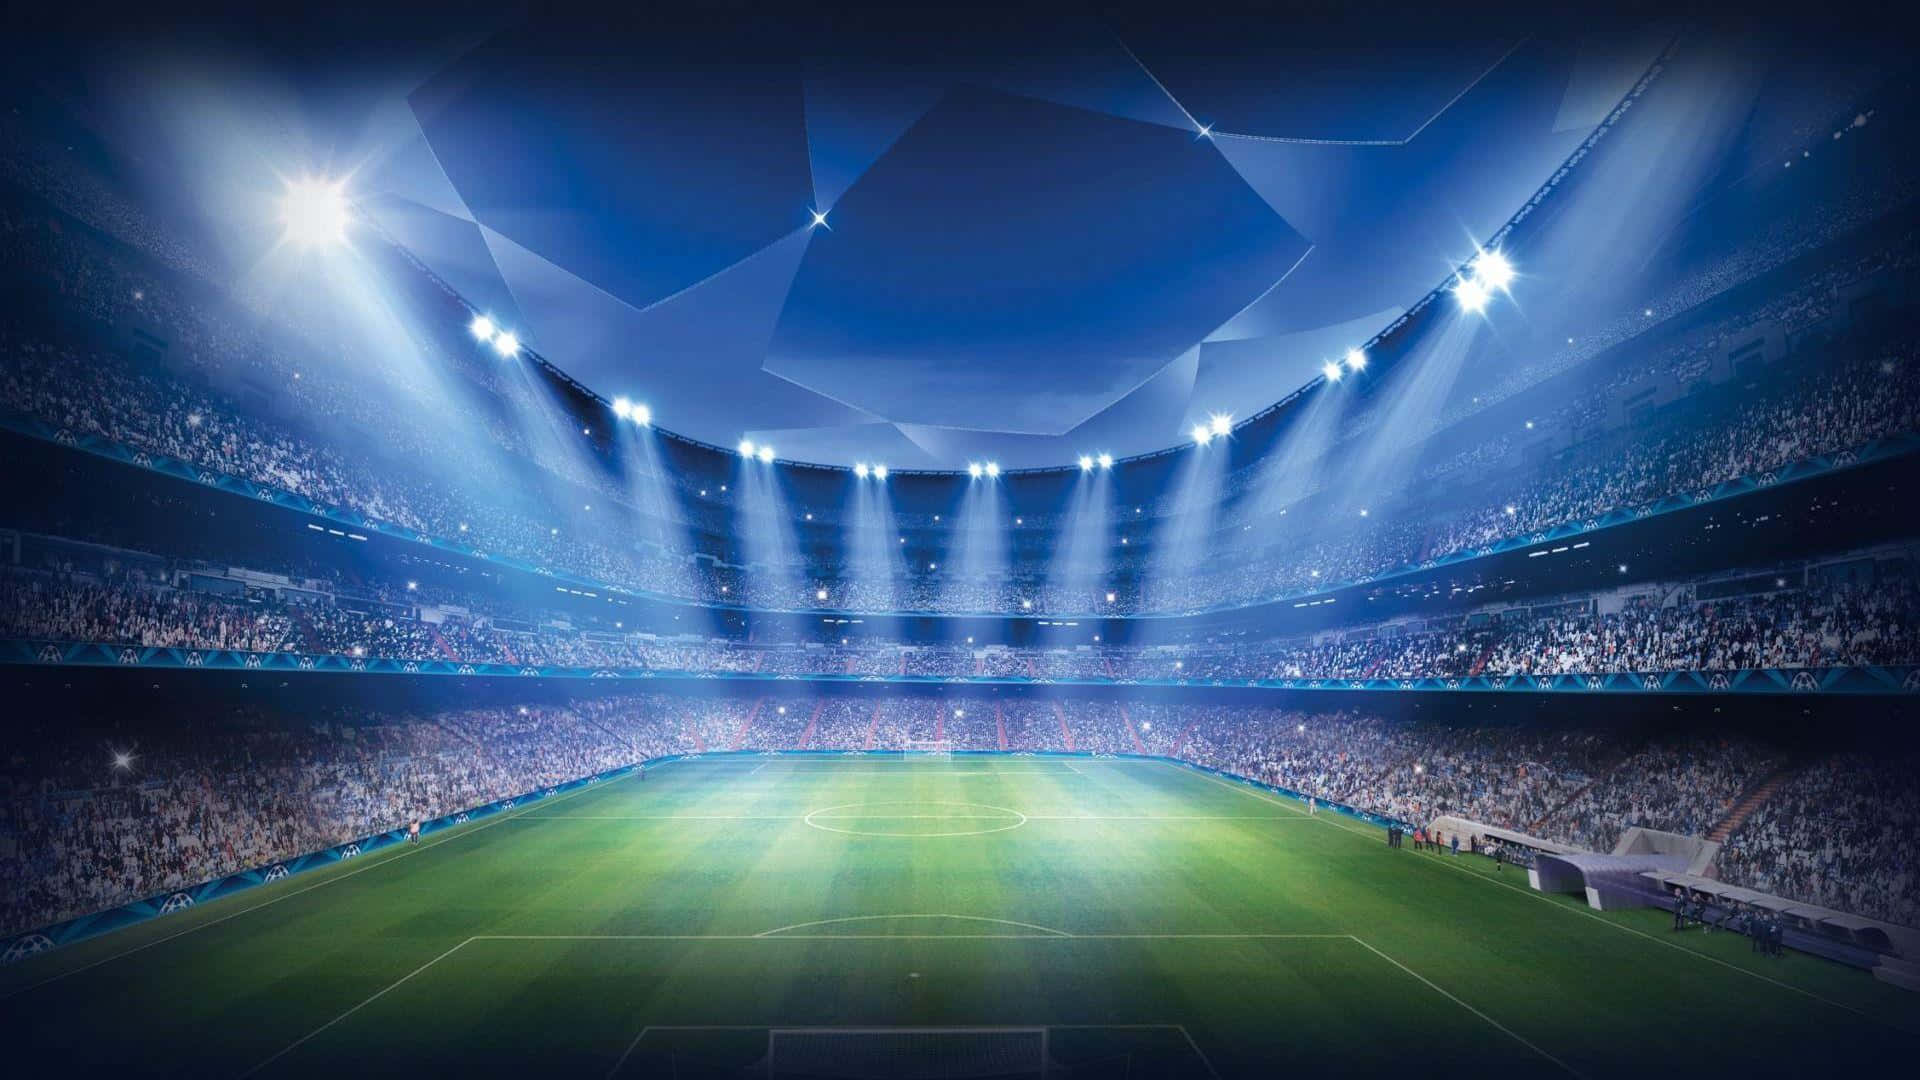 Super Cool Uefa Champions League Digital Art Picture